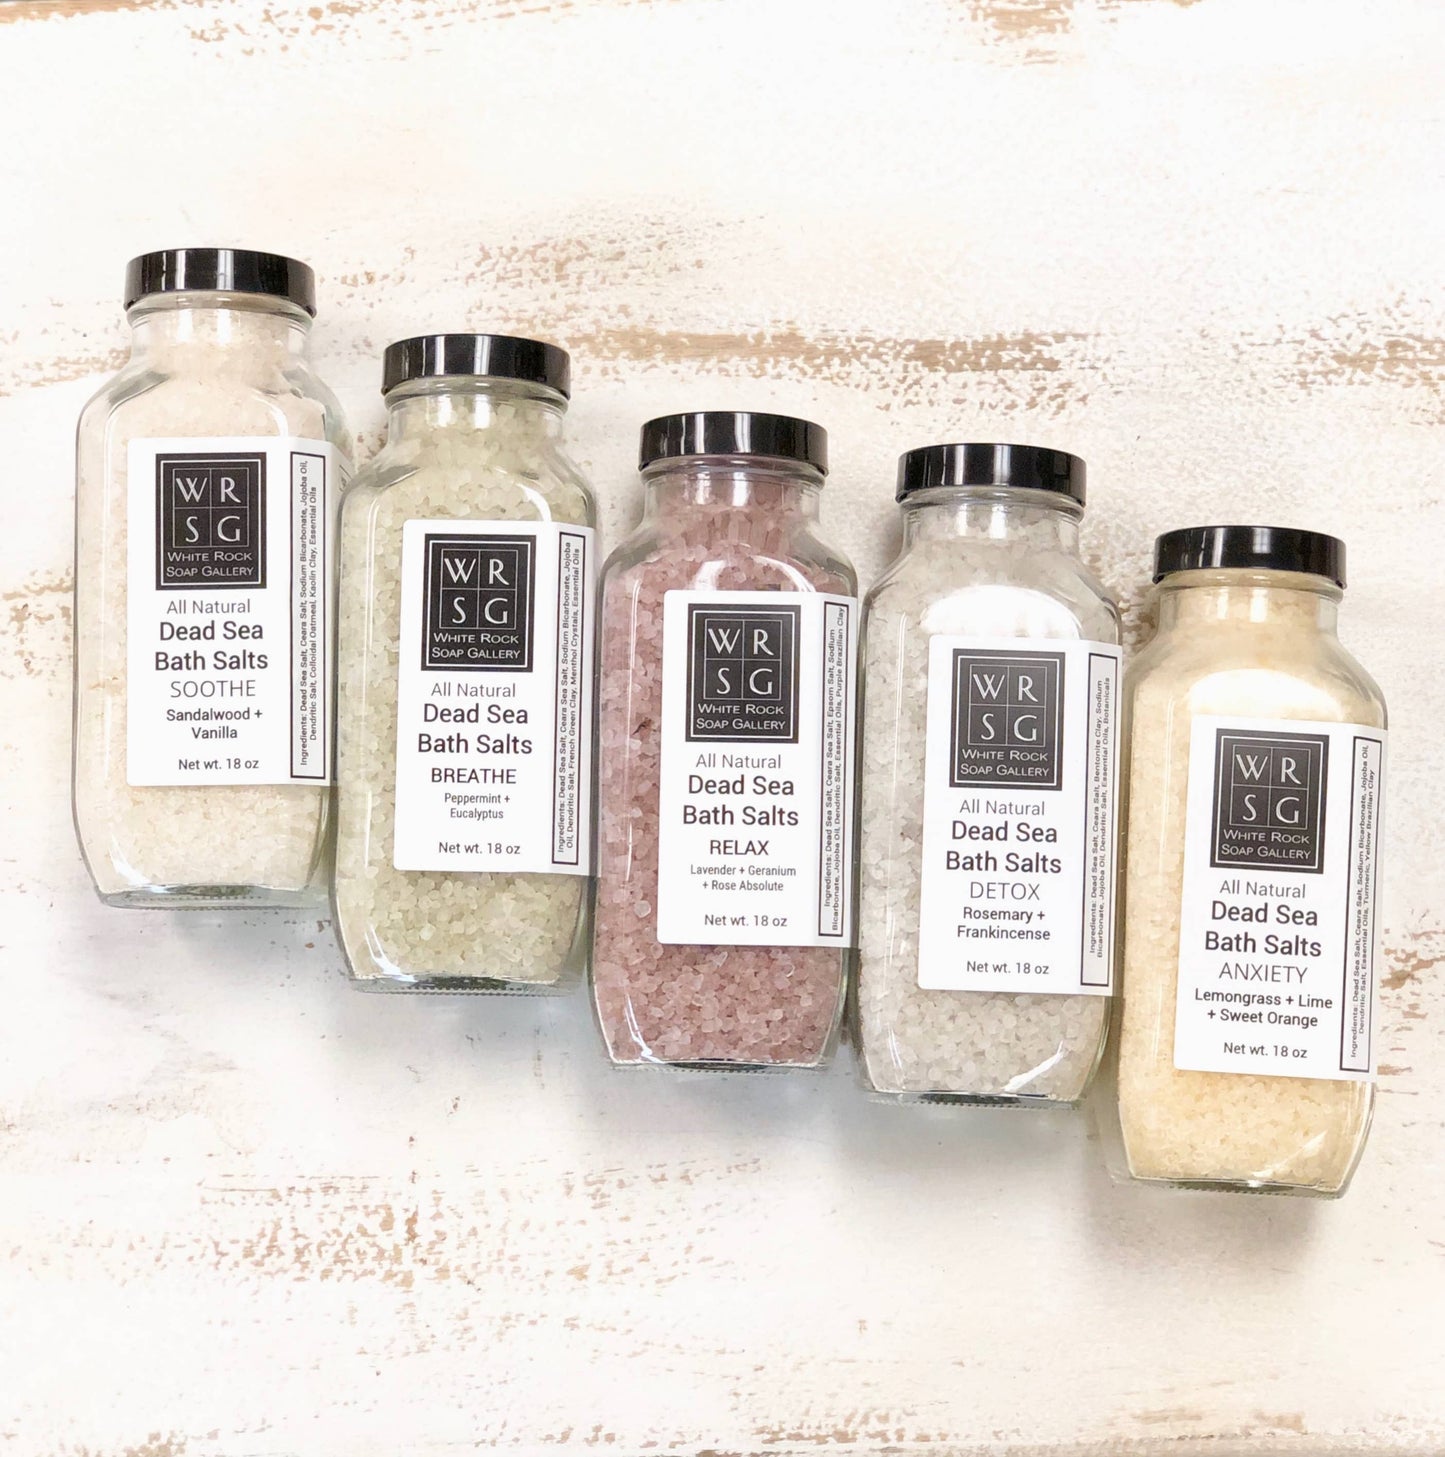 White Rock Soap Gallery - Dead Sea Bath Salts Square Jar: REVIVE - Rosemary Mint